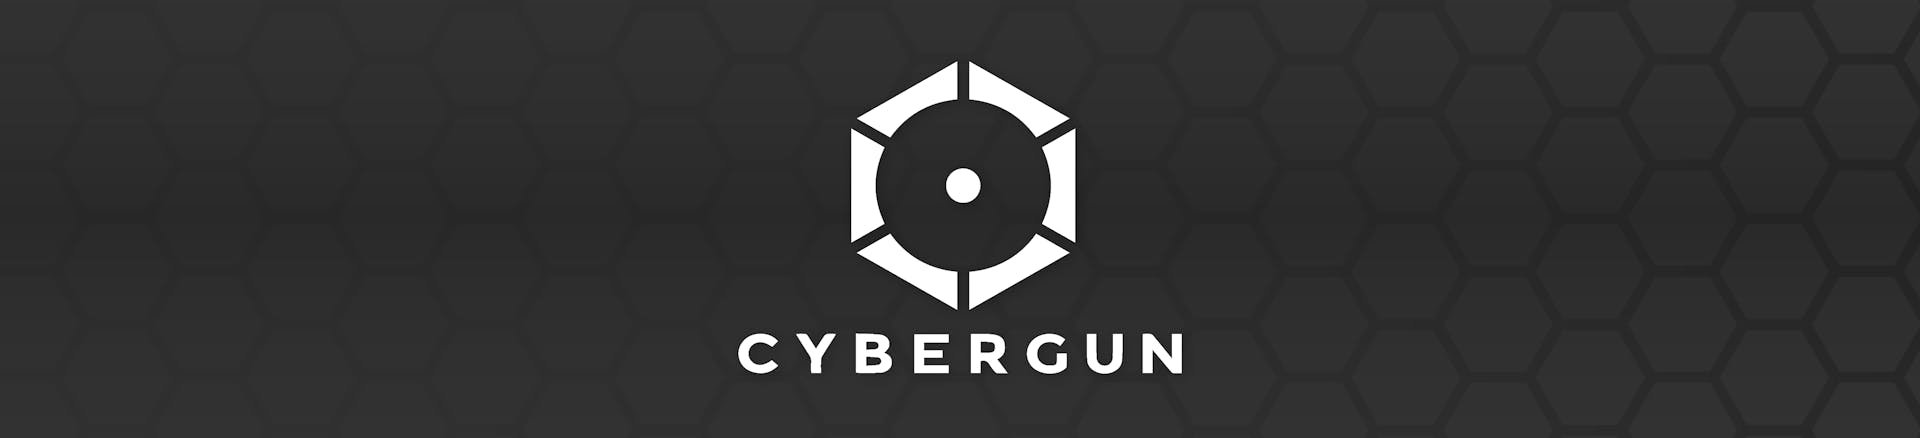 Cybergun Airsoft